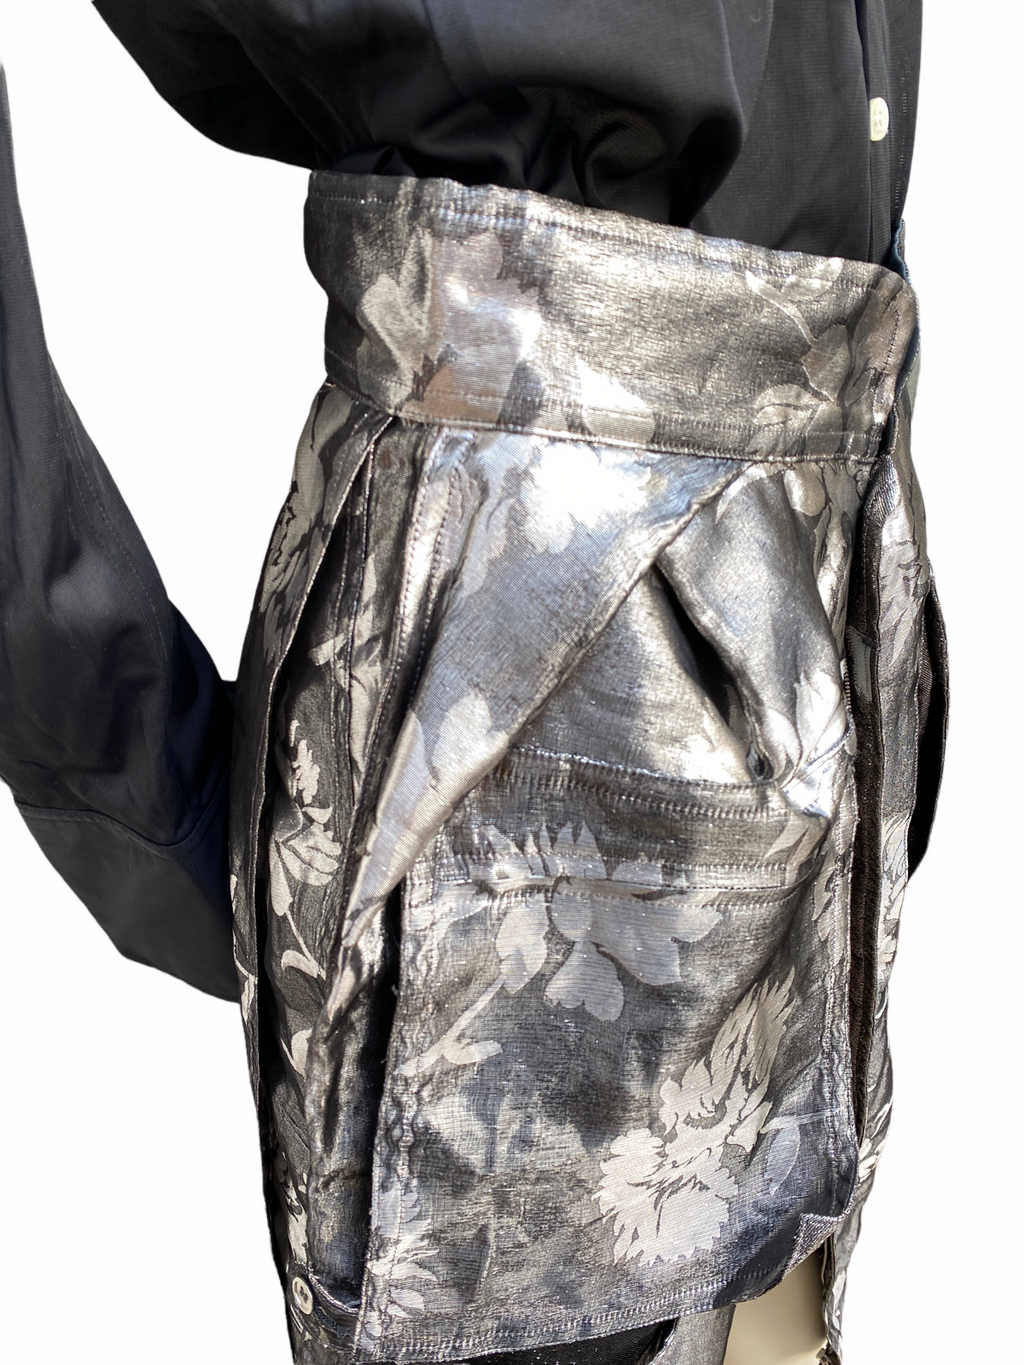 1595$ Maison Margiela SS 2016 Gorgeous Silver Cargo Floral Skirt